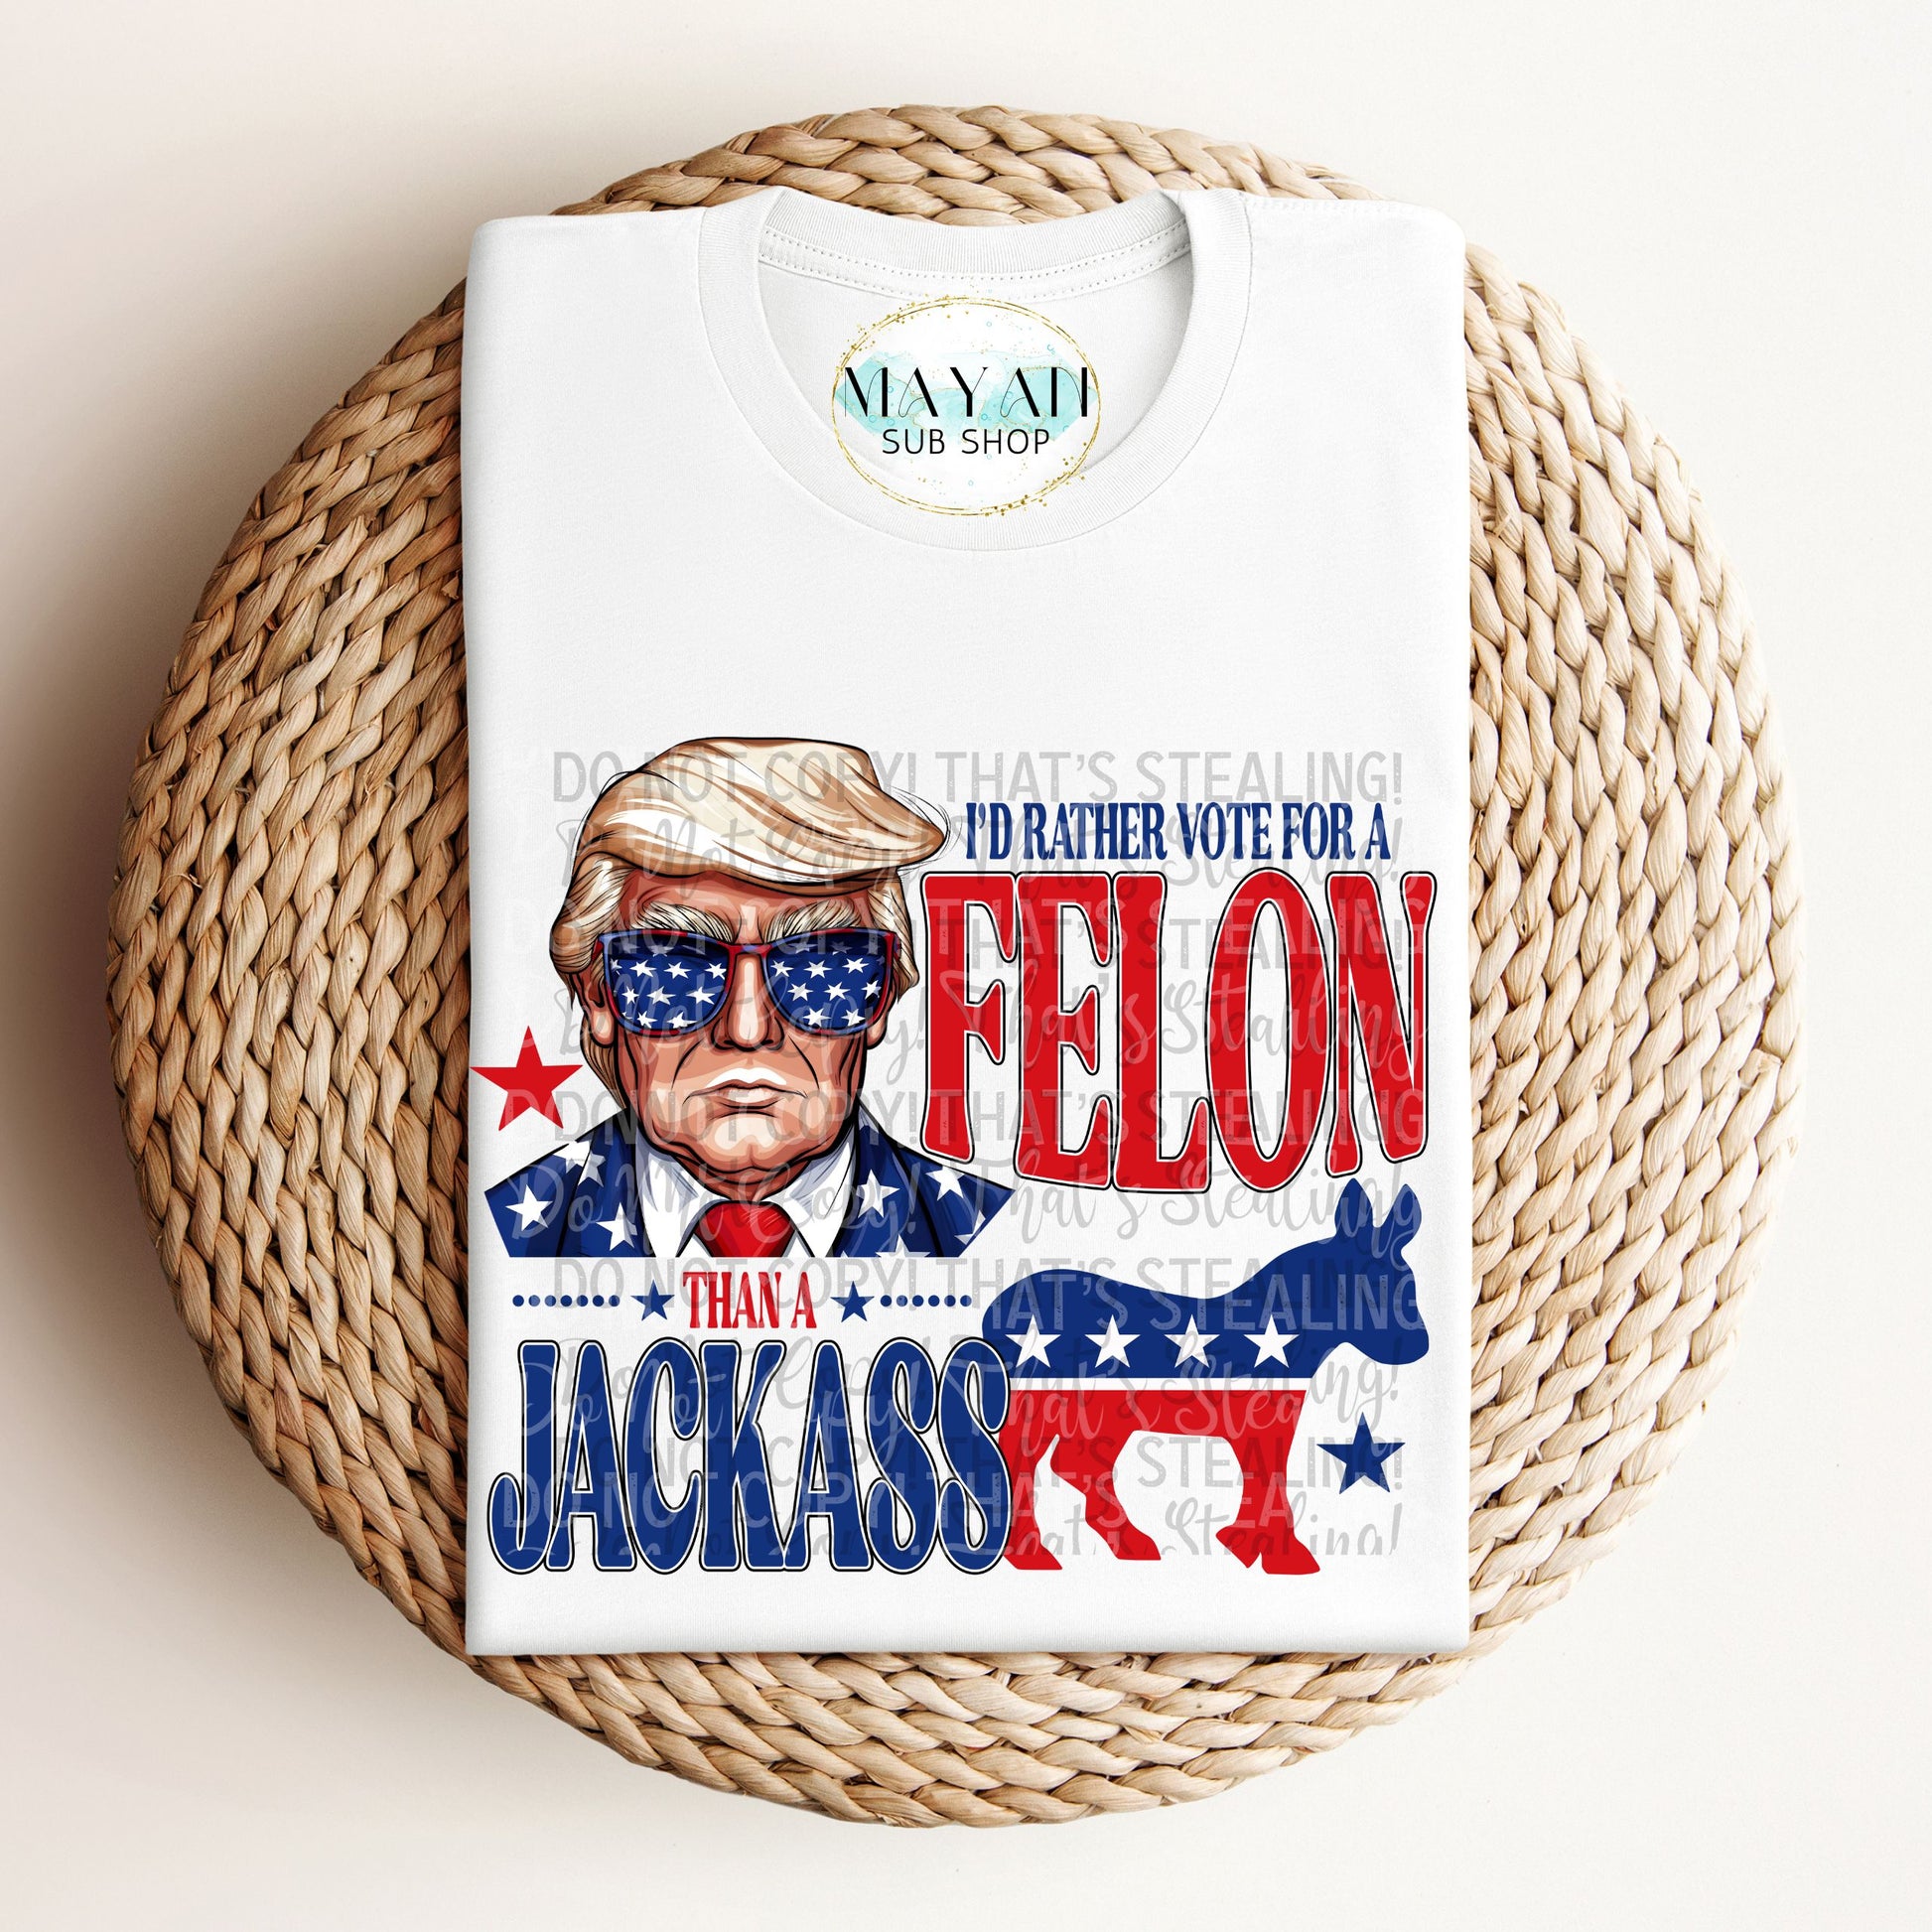 Vote for a felon shirt. -Mayan Sub Shop